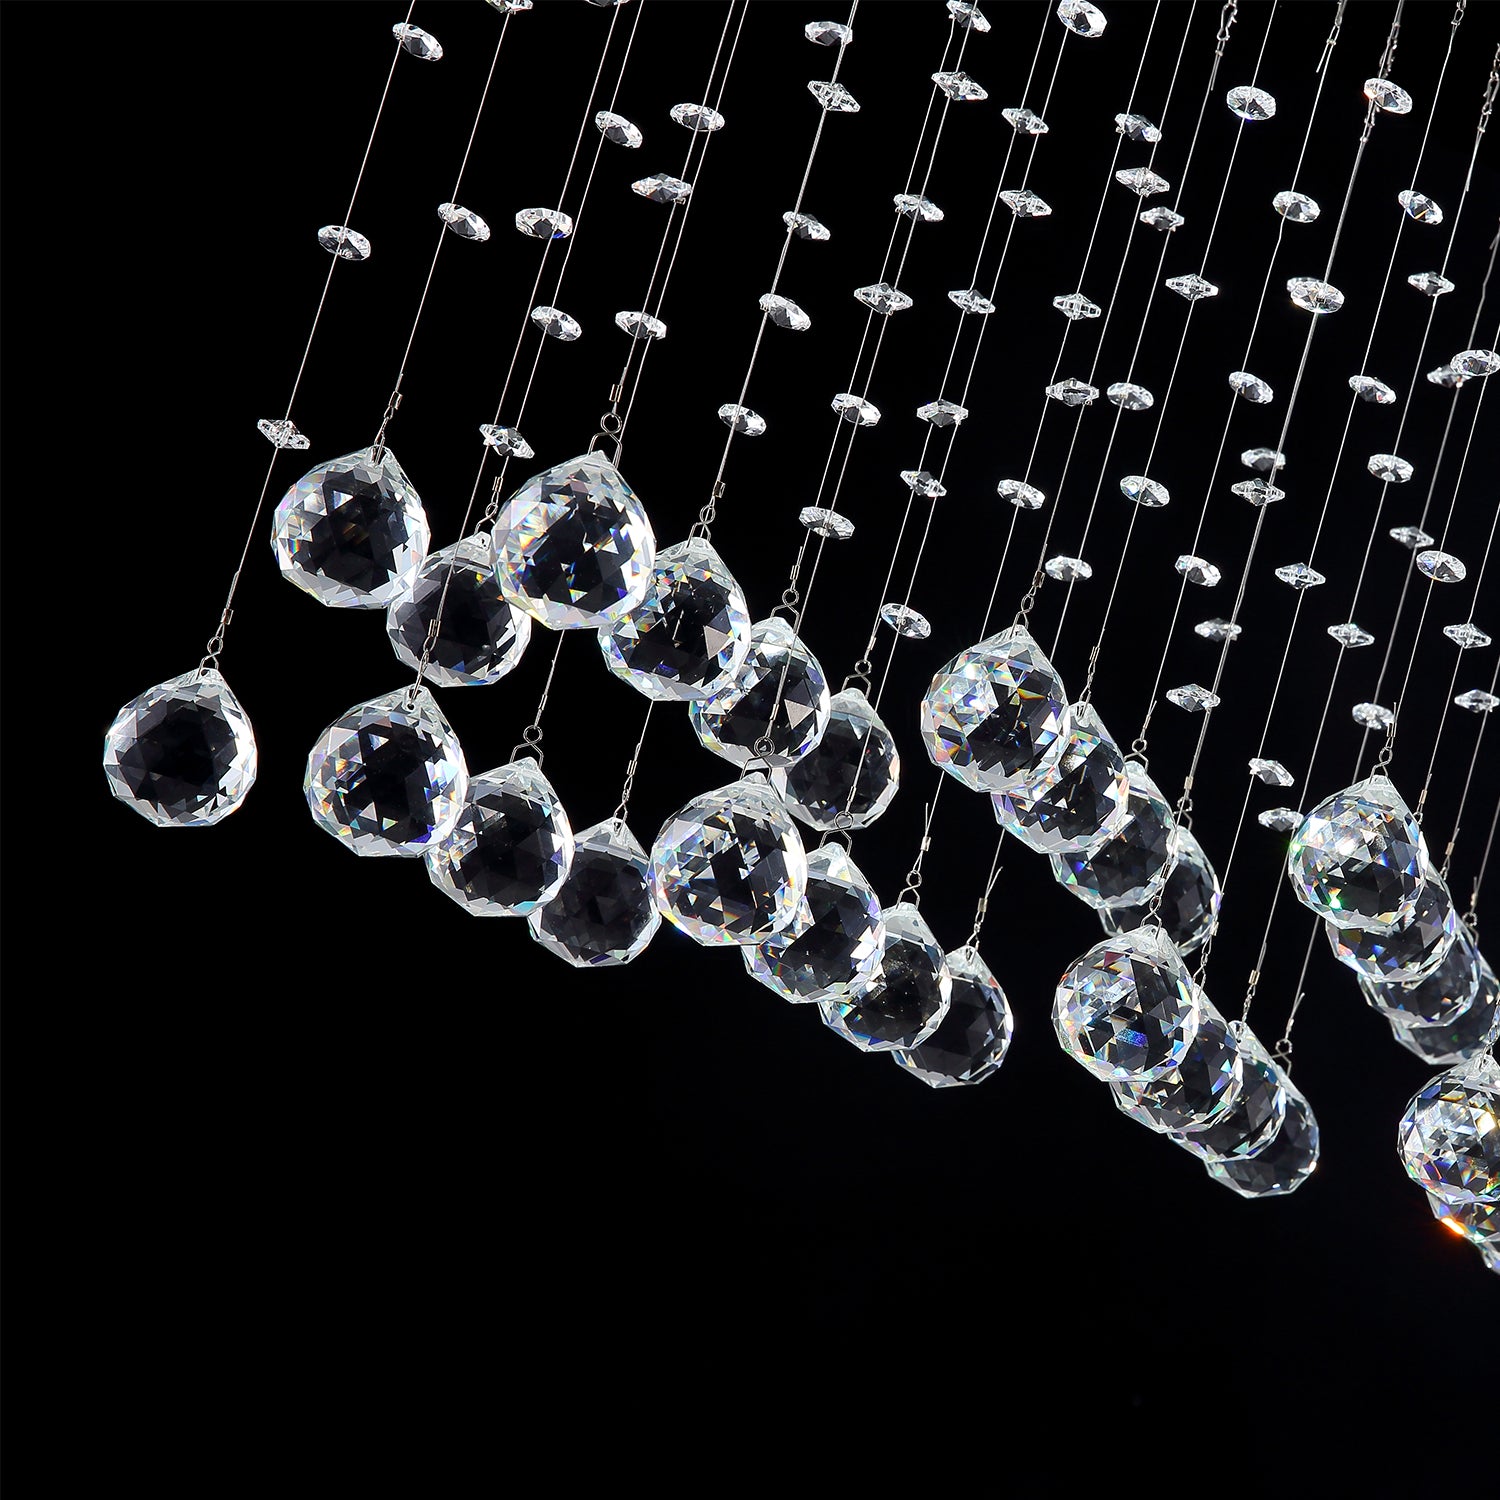 Modern Rectangular Crystal Chandelier Lighting - Details